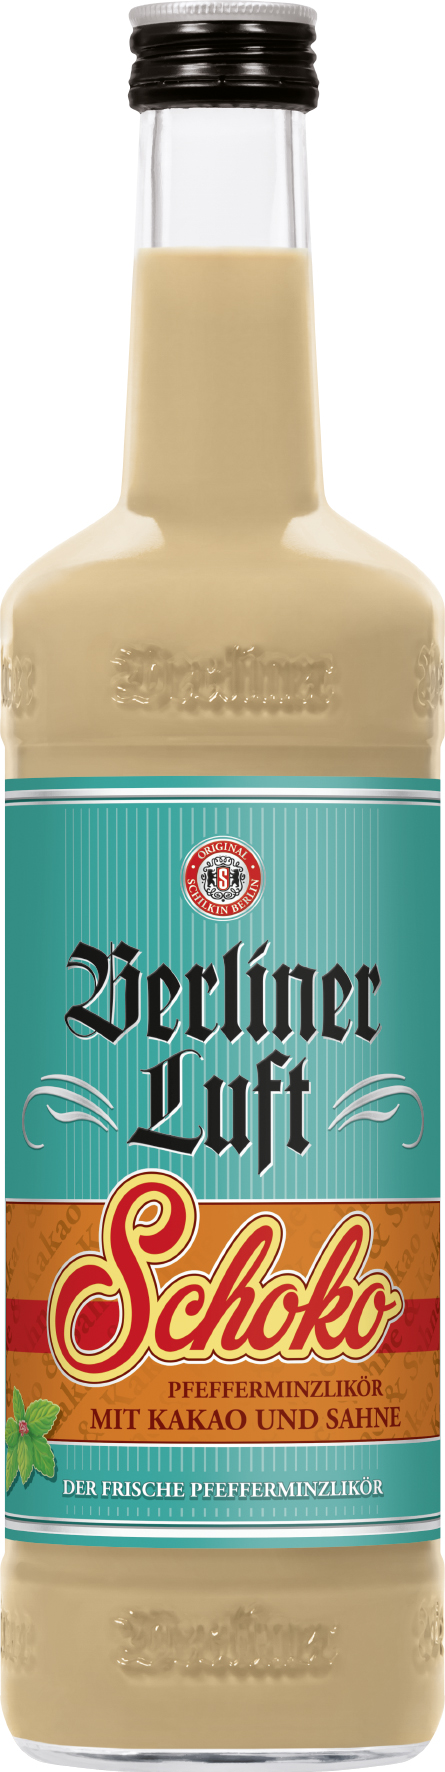 Berliner Luft Schoko-Pfefferminz Likör - 0,7L 15% vol